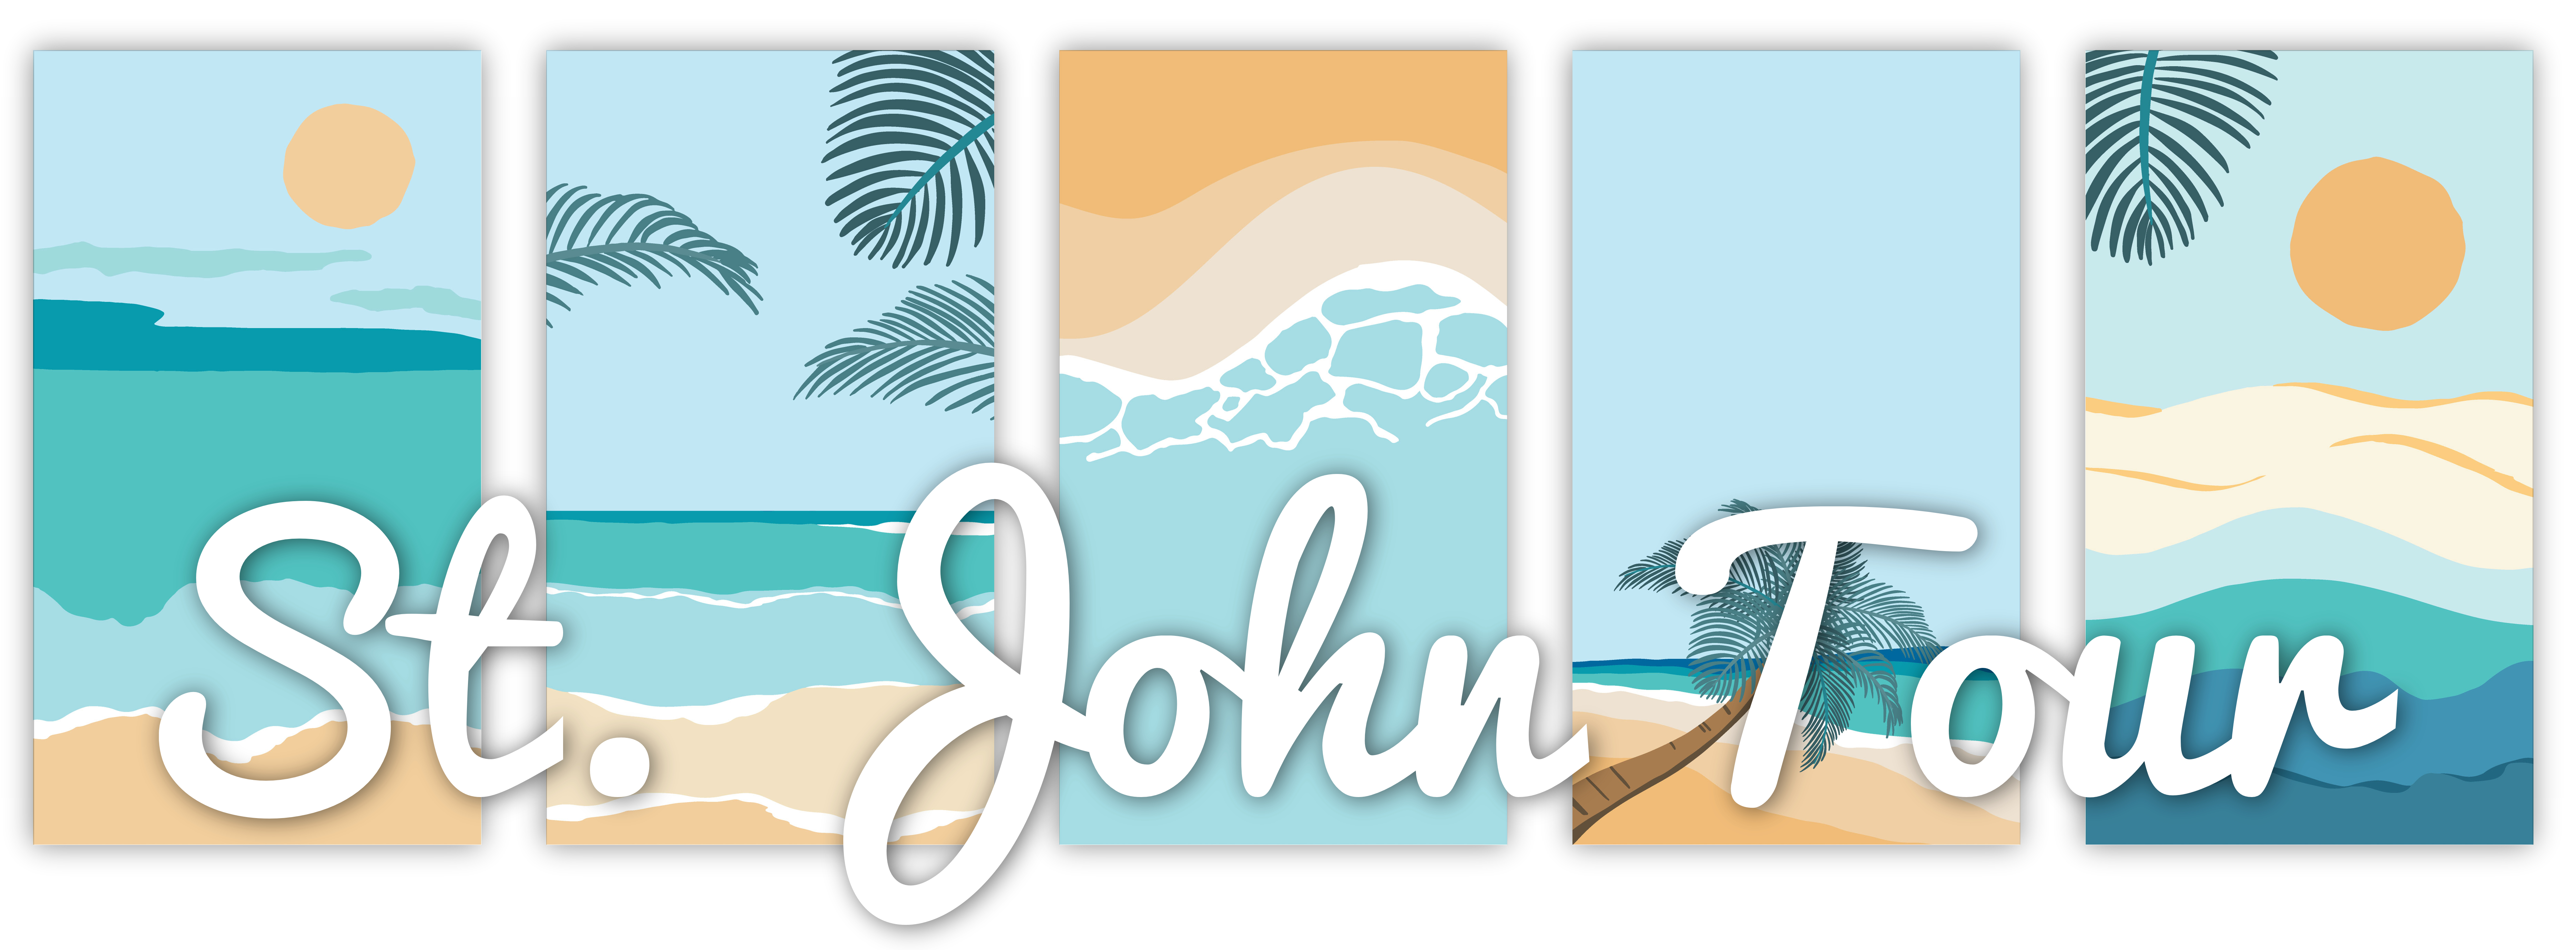 St. John Tour logo